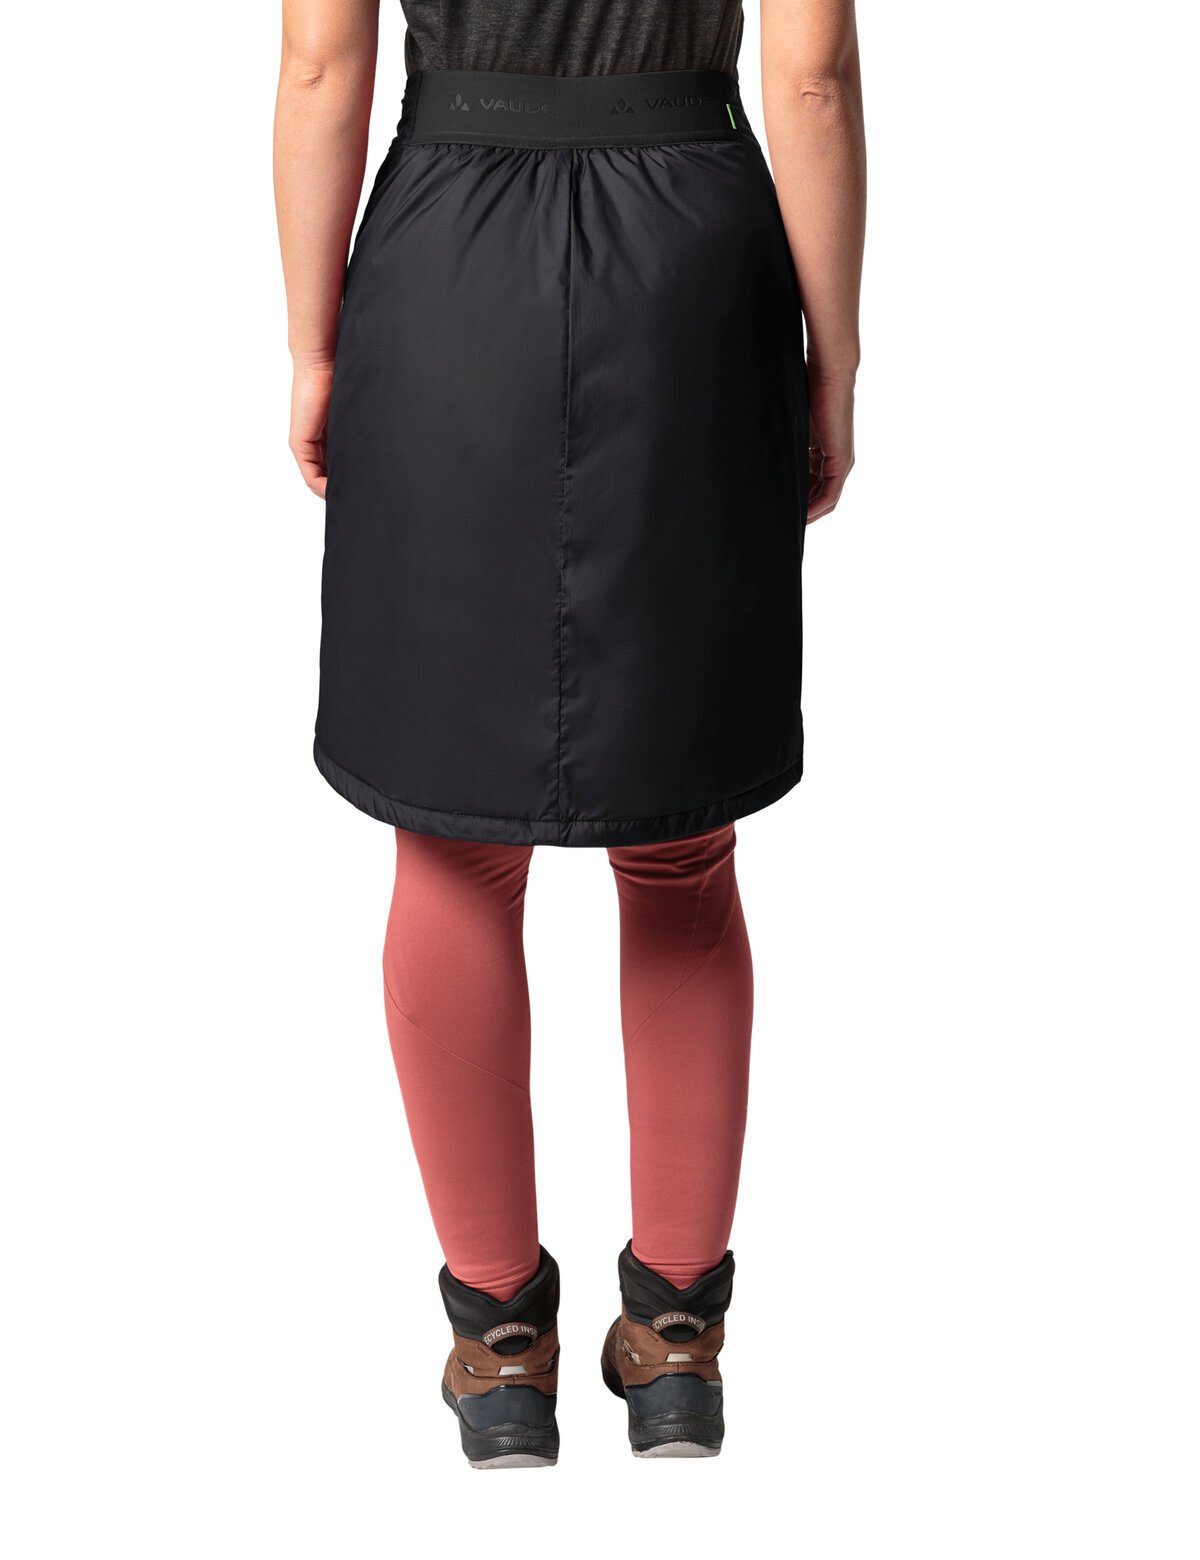 Skirt Wickelrock Women's Unifarbe Padded in VAUDE black Neyland